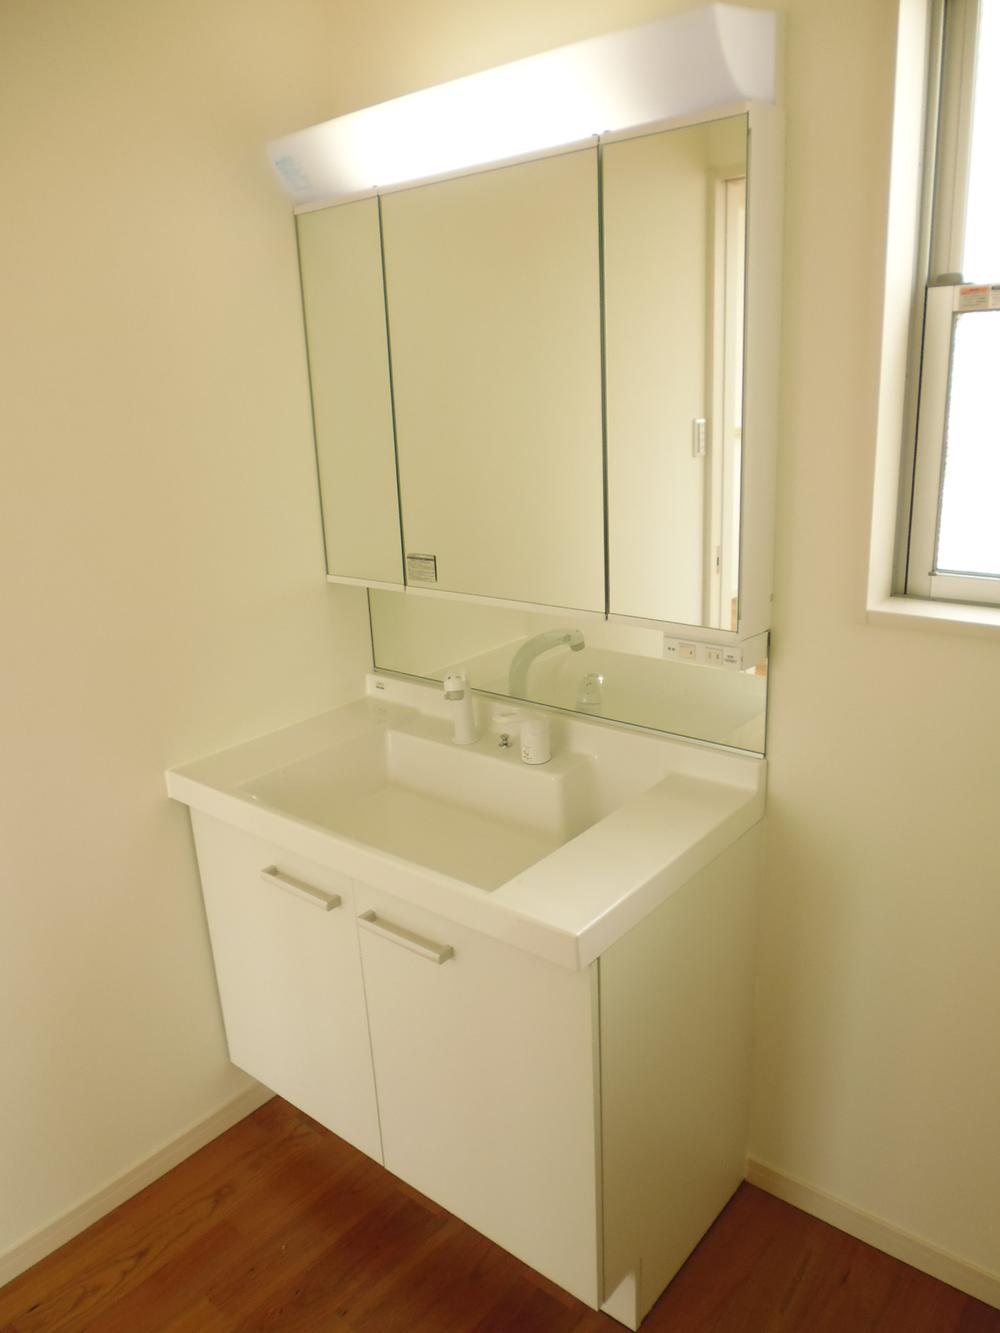 Wash basin, toilet.  ■ Bathroom vanity